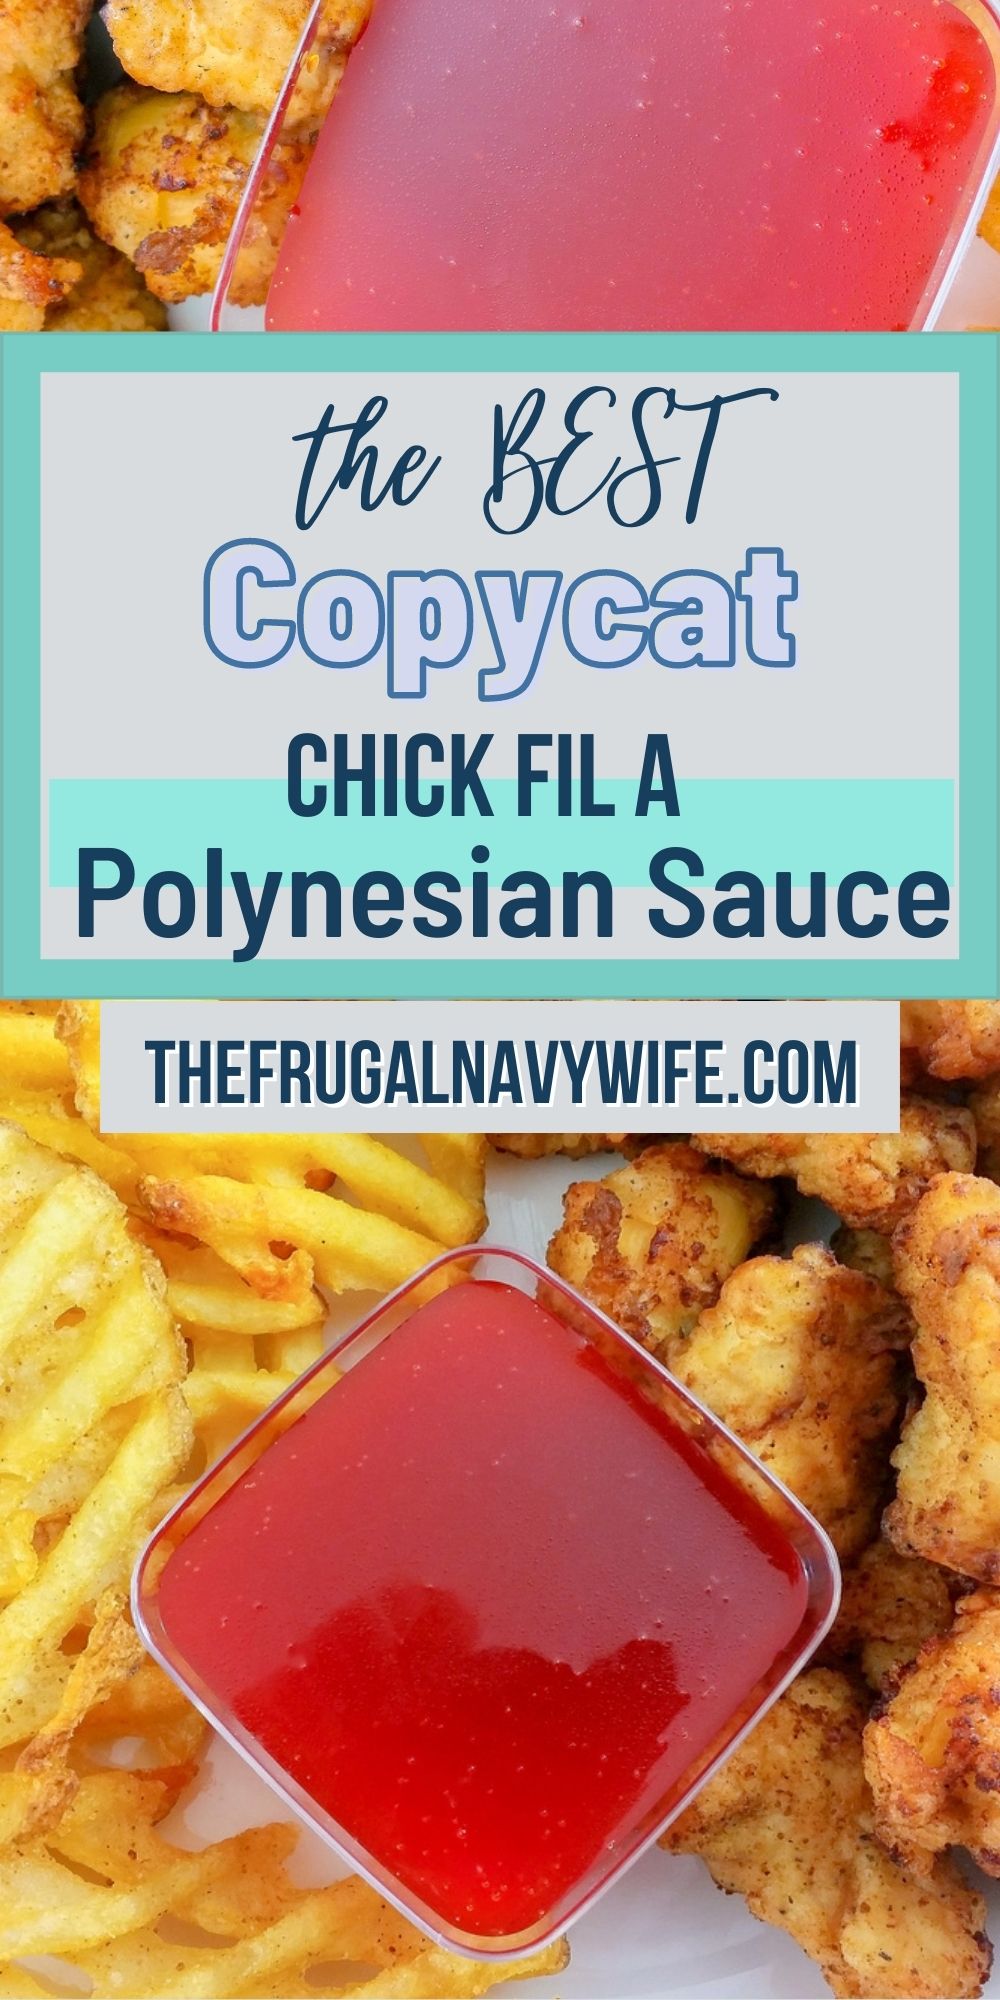 Copycat Chick-fil-A Sandwich - Damn Delicious